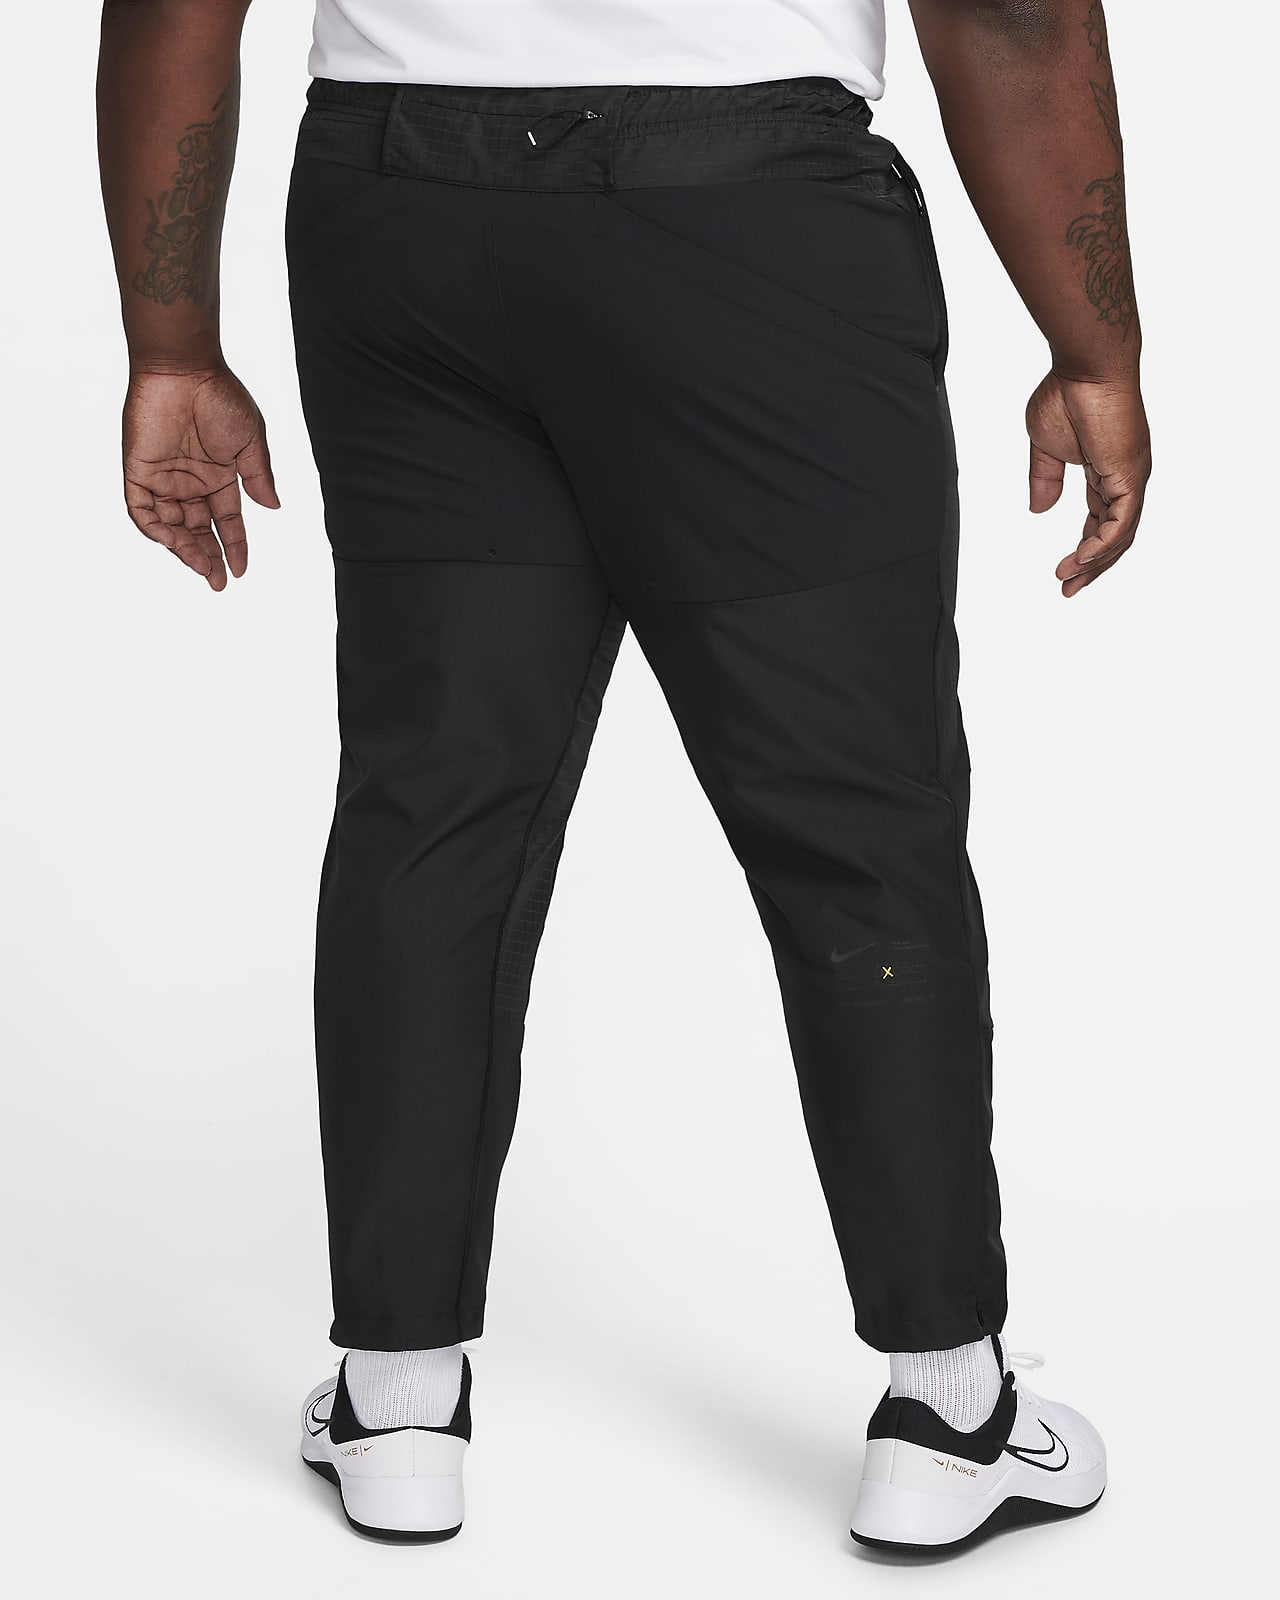 Comprar en línea pants deportivos para hombre. Nike MX